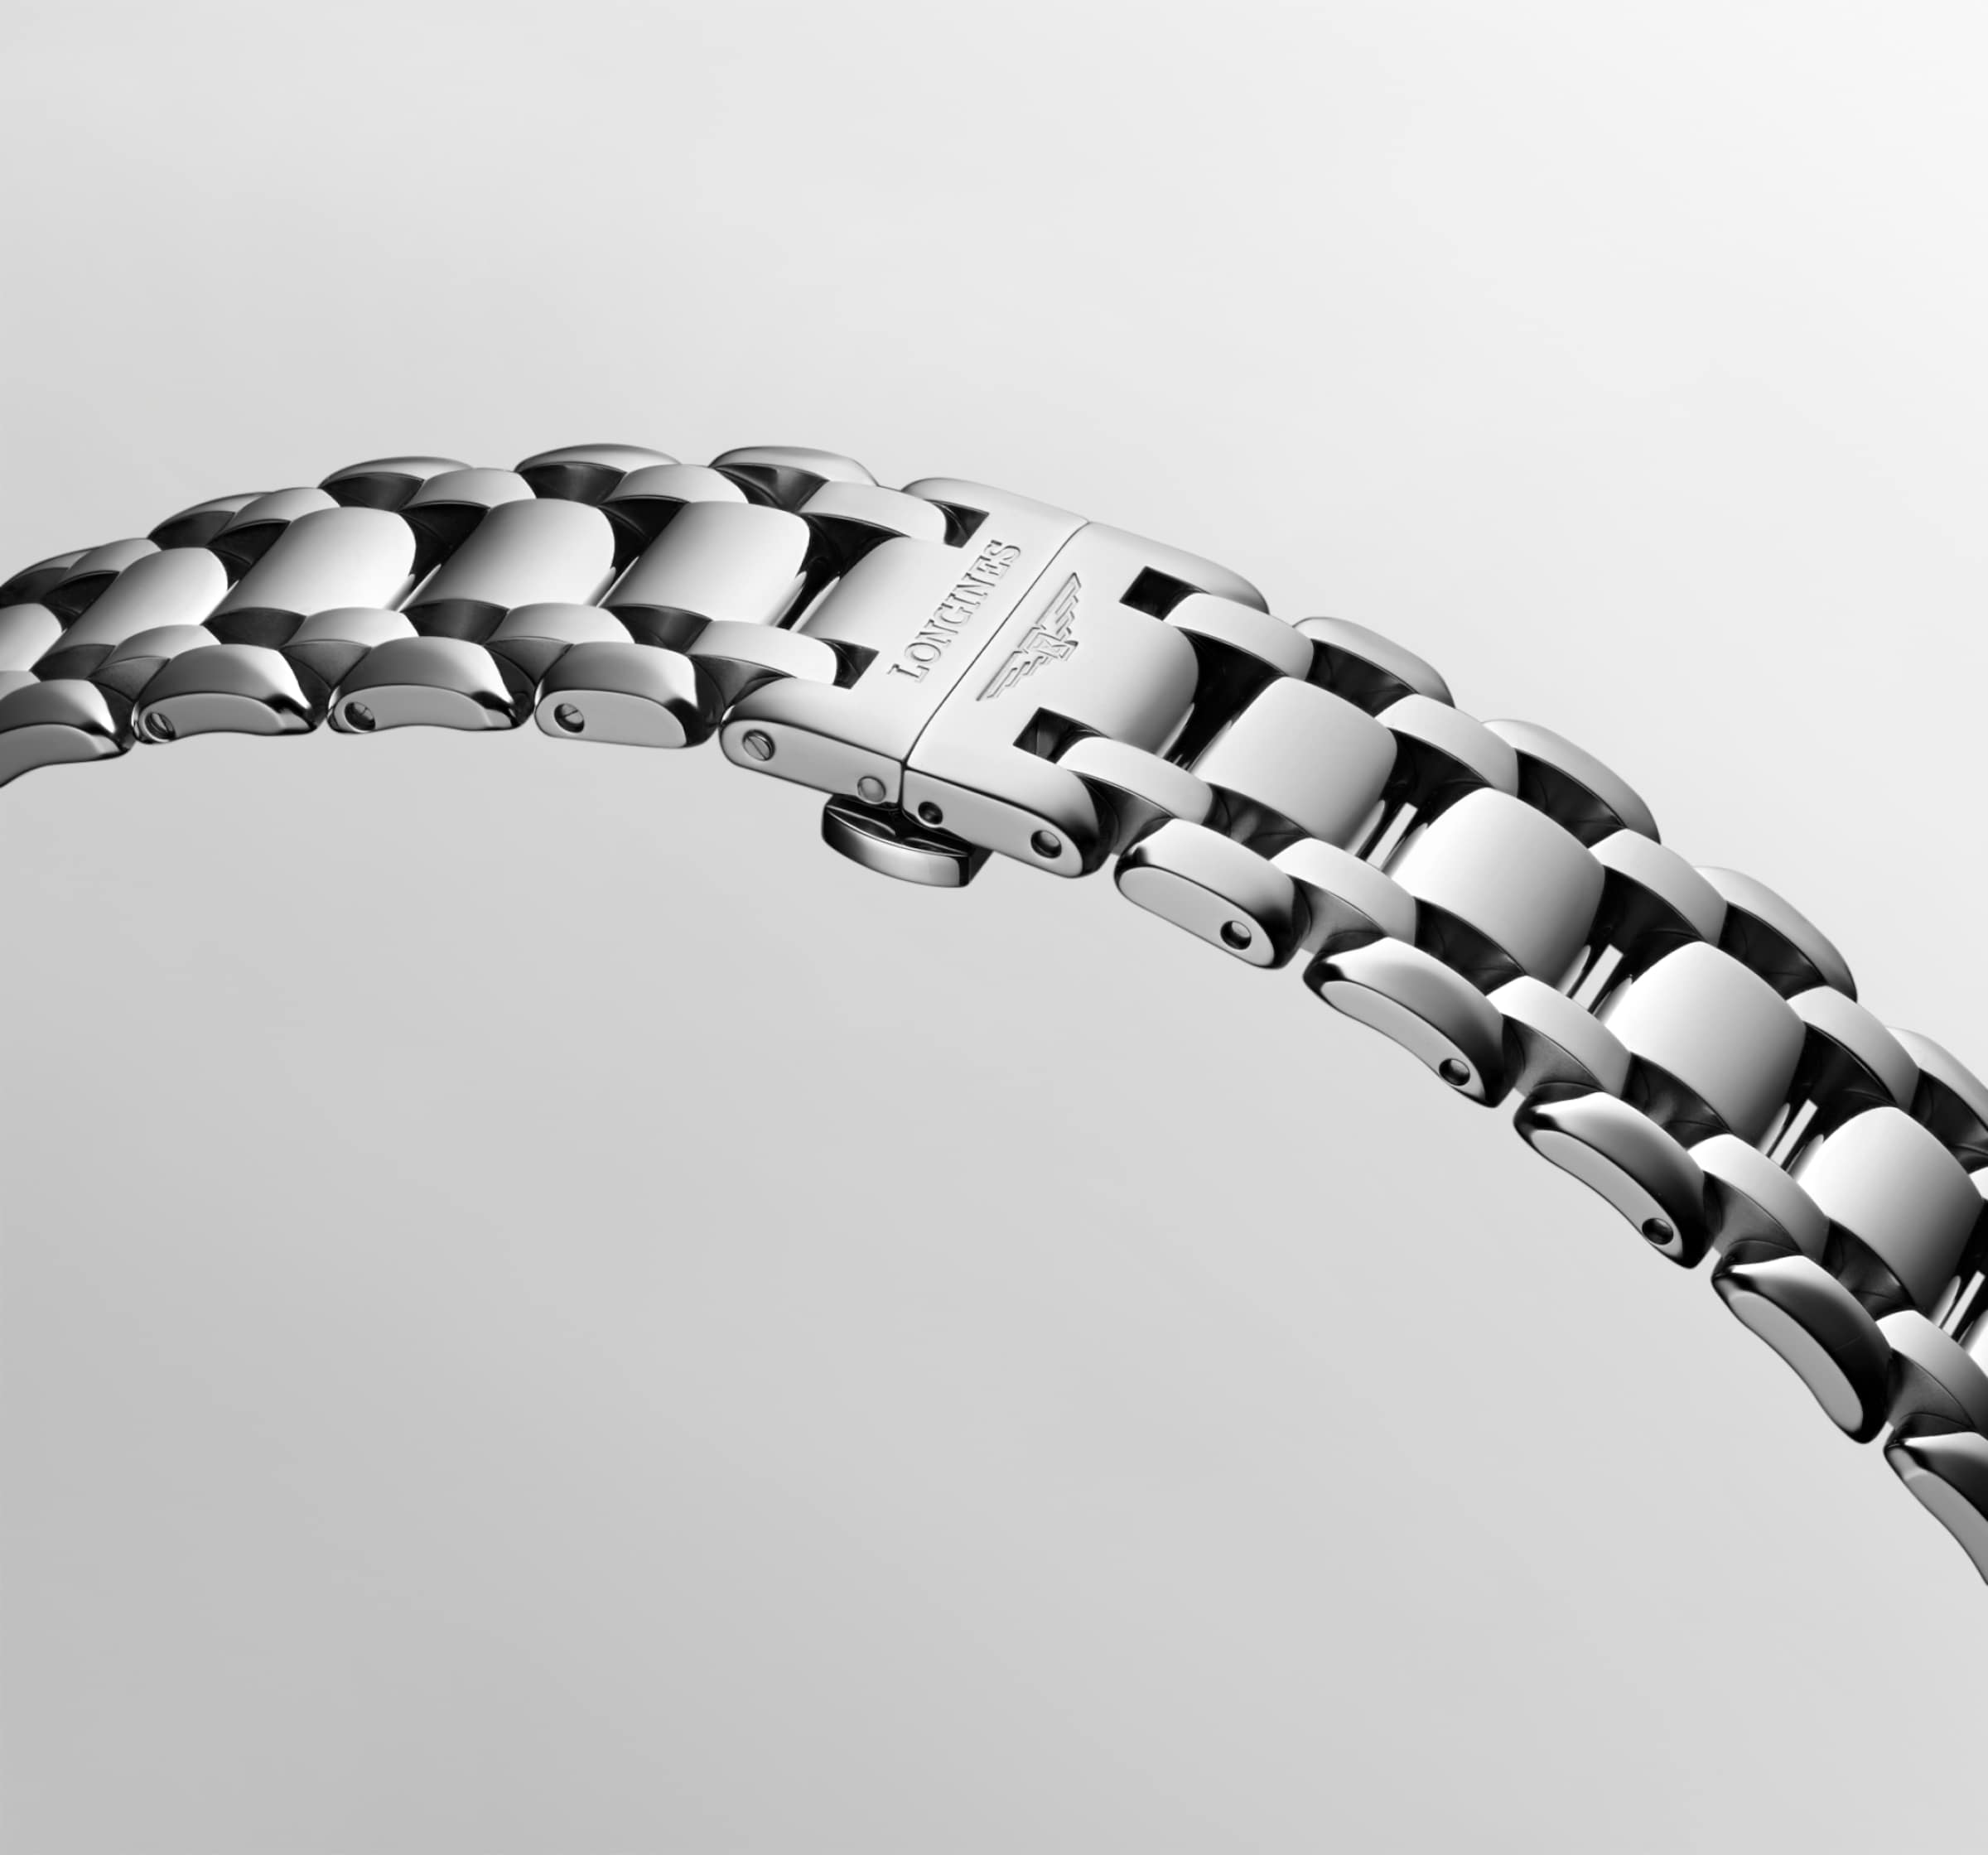 Longines PRIMALUNA Quartz Stainless steel Watch - L8.122.4.90.6